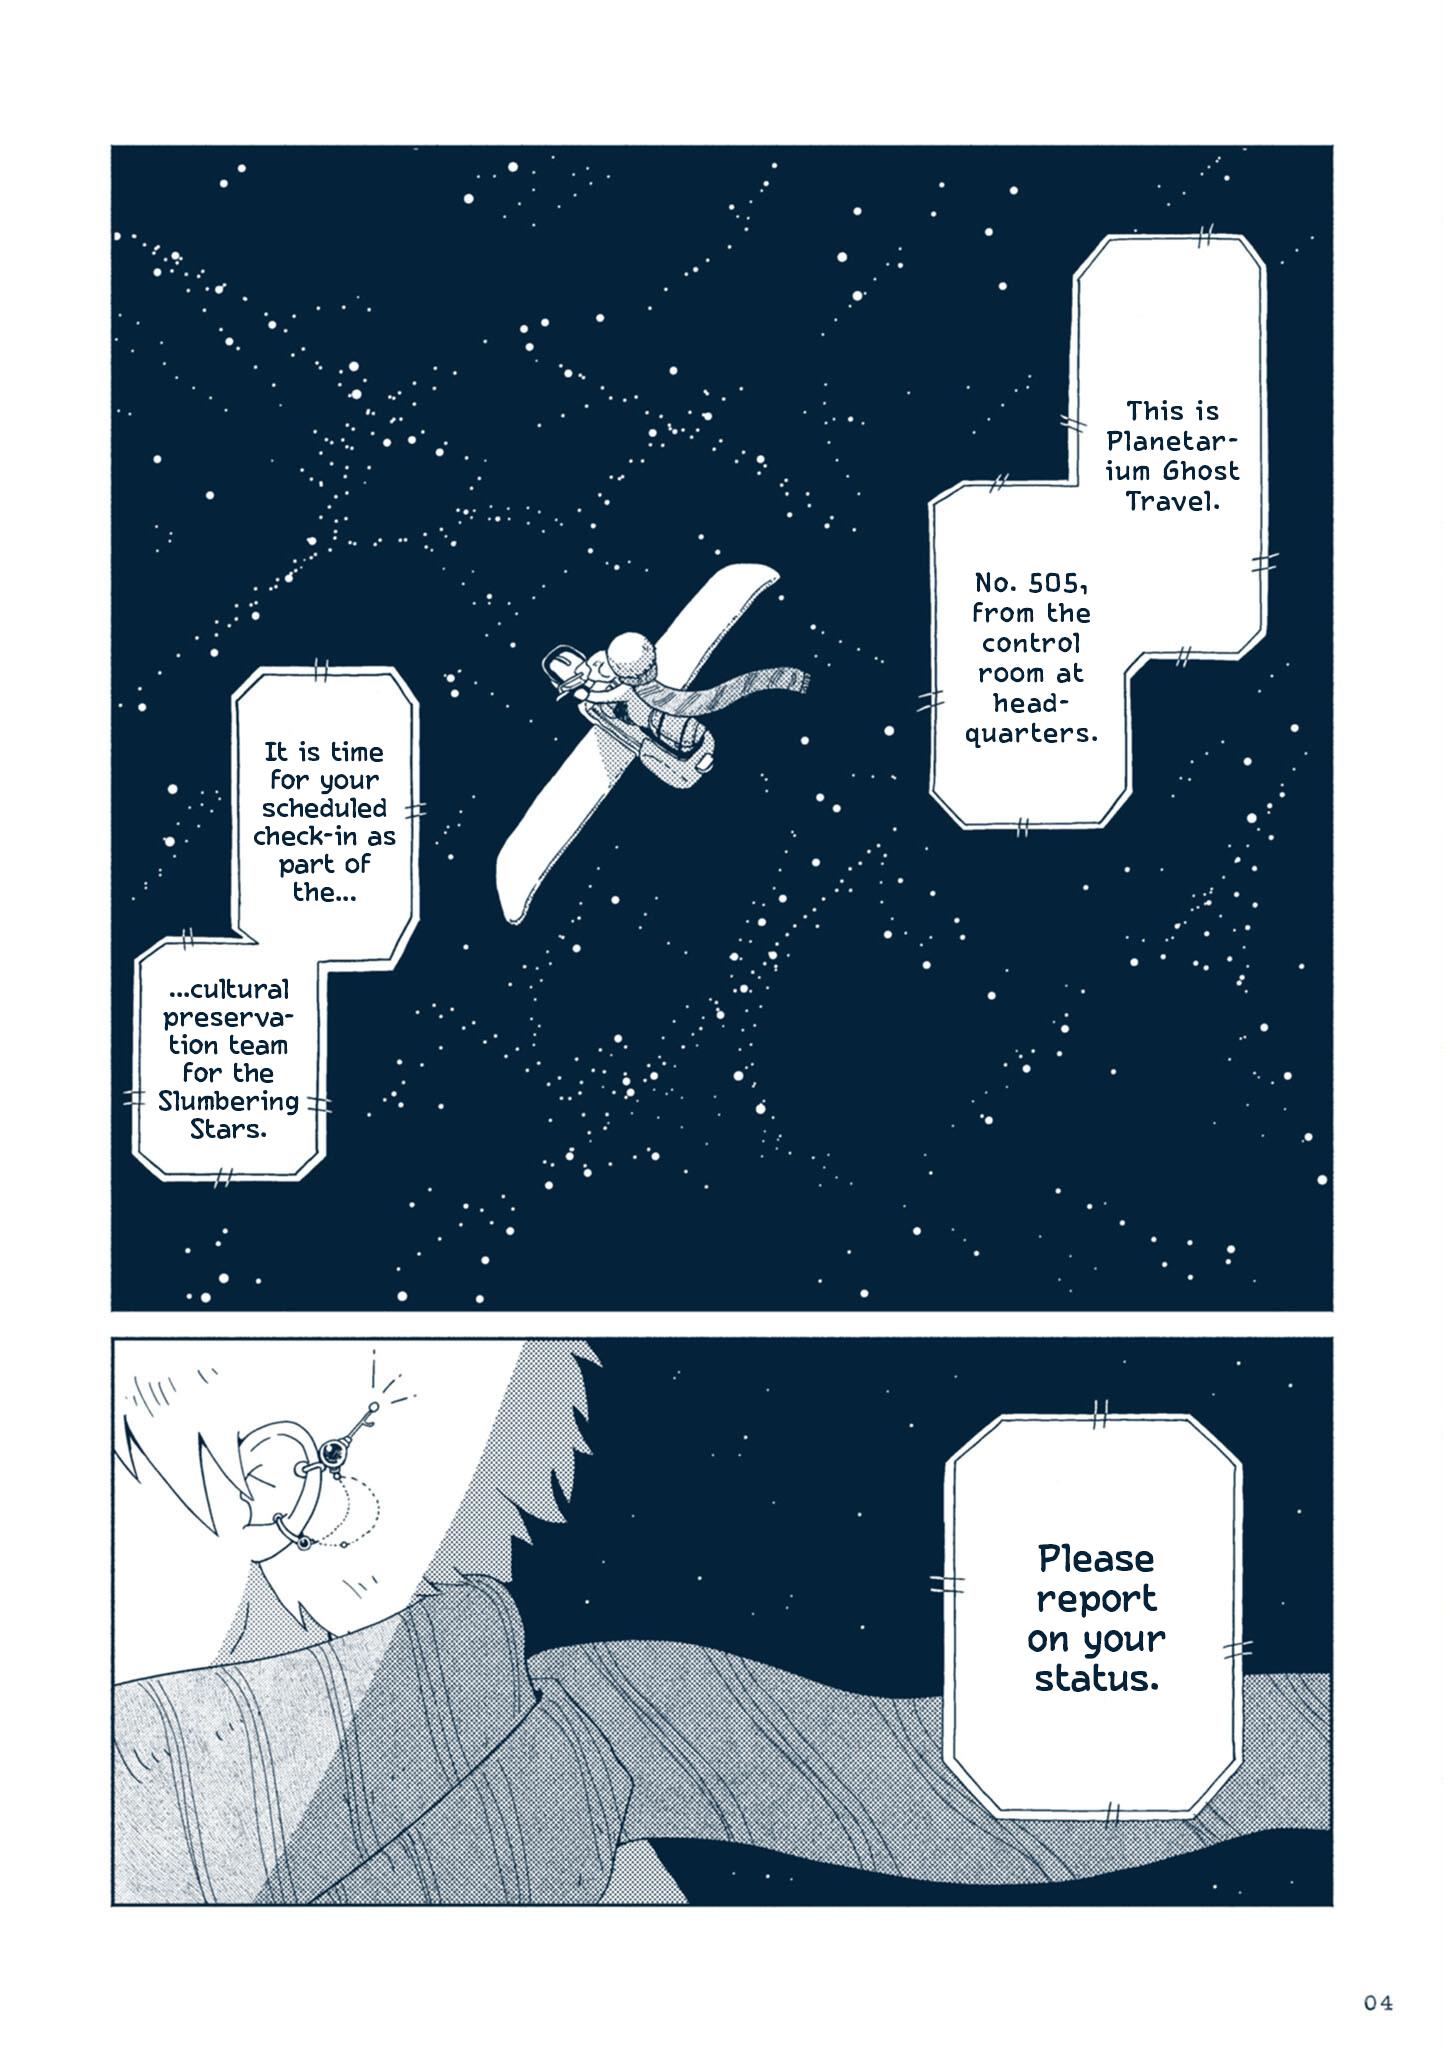 Star Tripper: Planetarium Ghost Travel - chapter 1 - #4